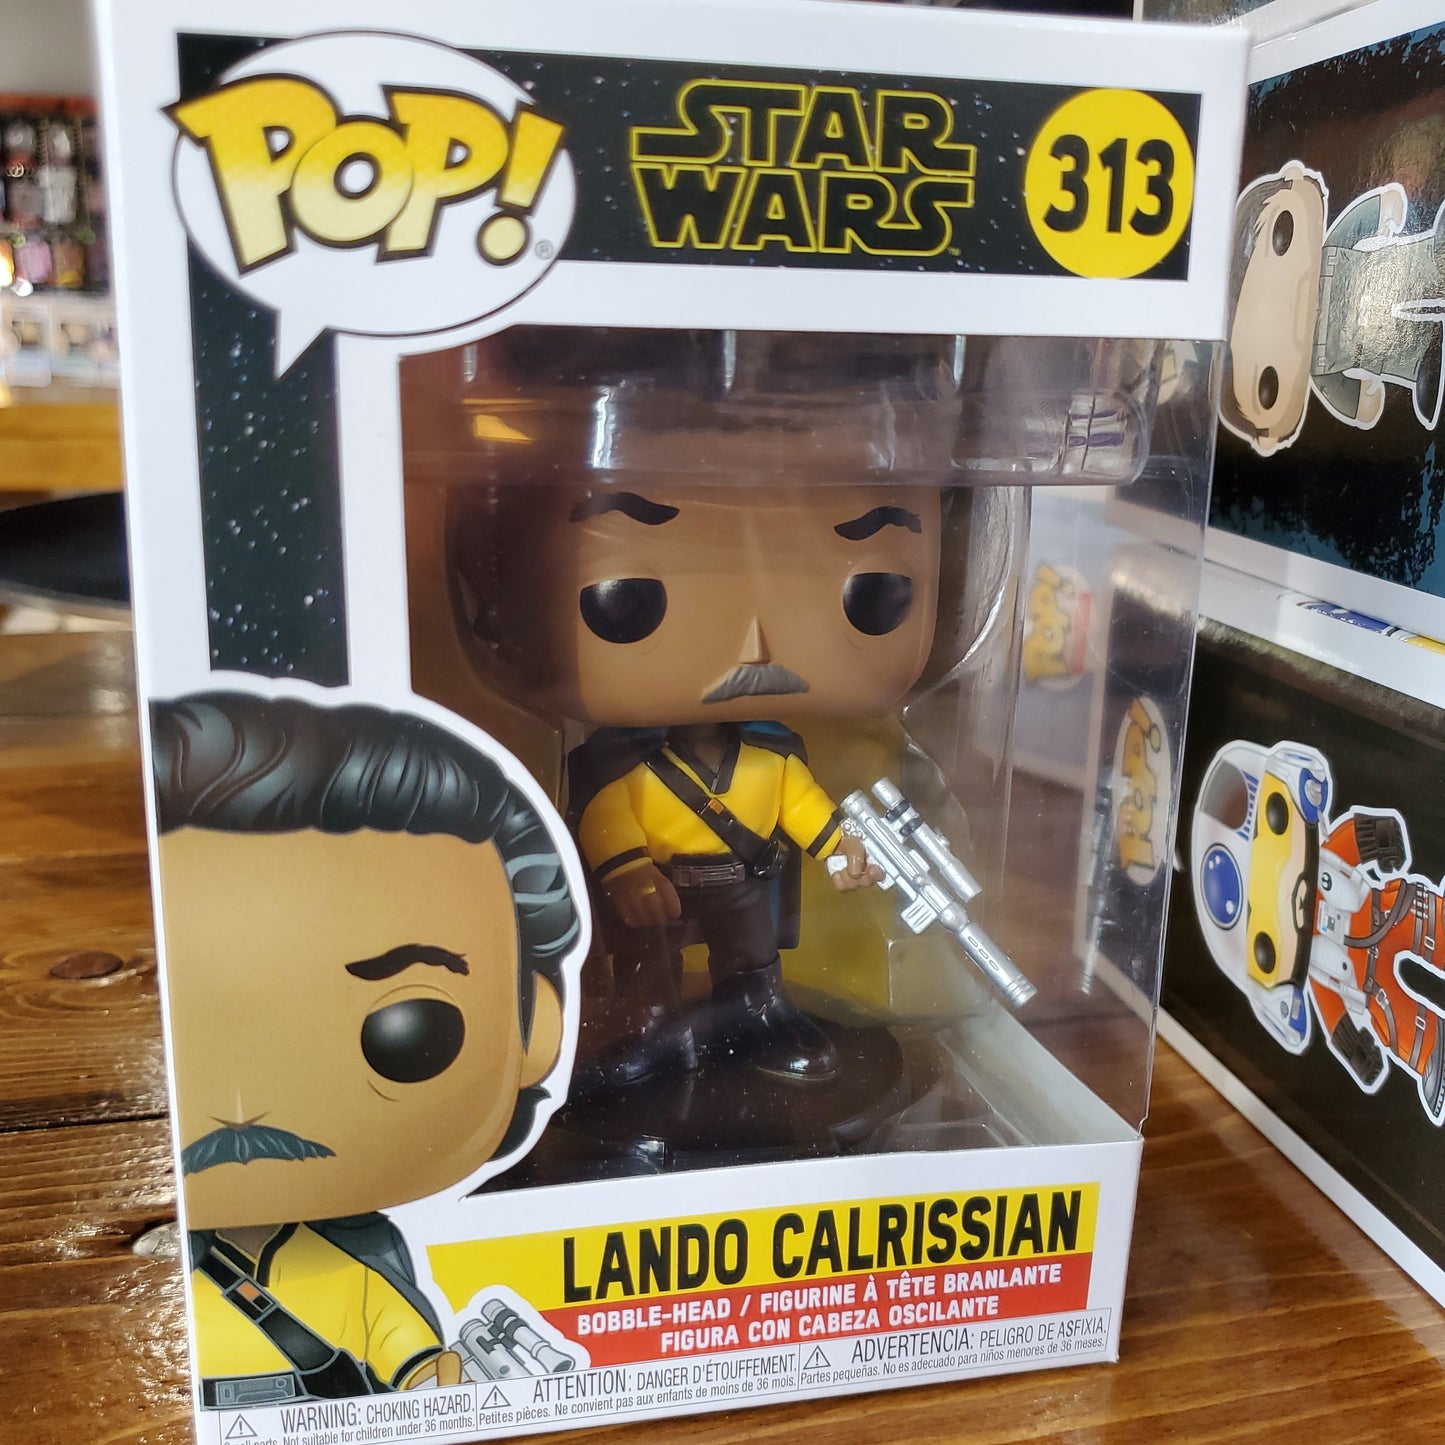 Star Wars Lando Calrissian 313 Funko Pop! Vinyl figure store 2020